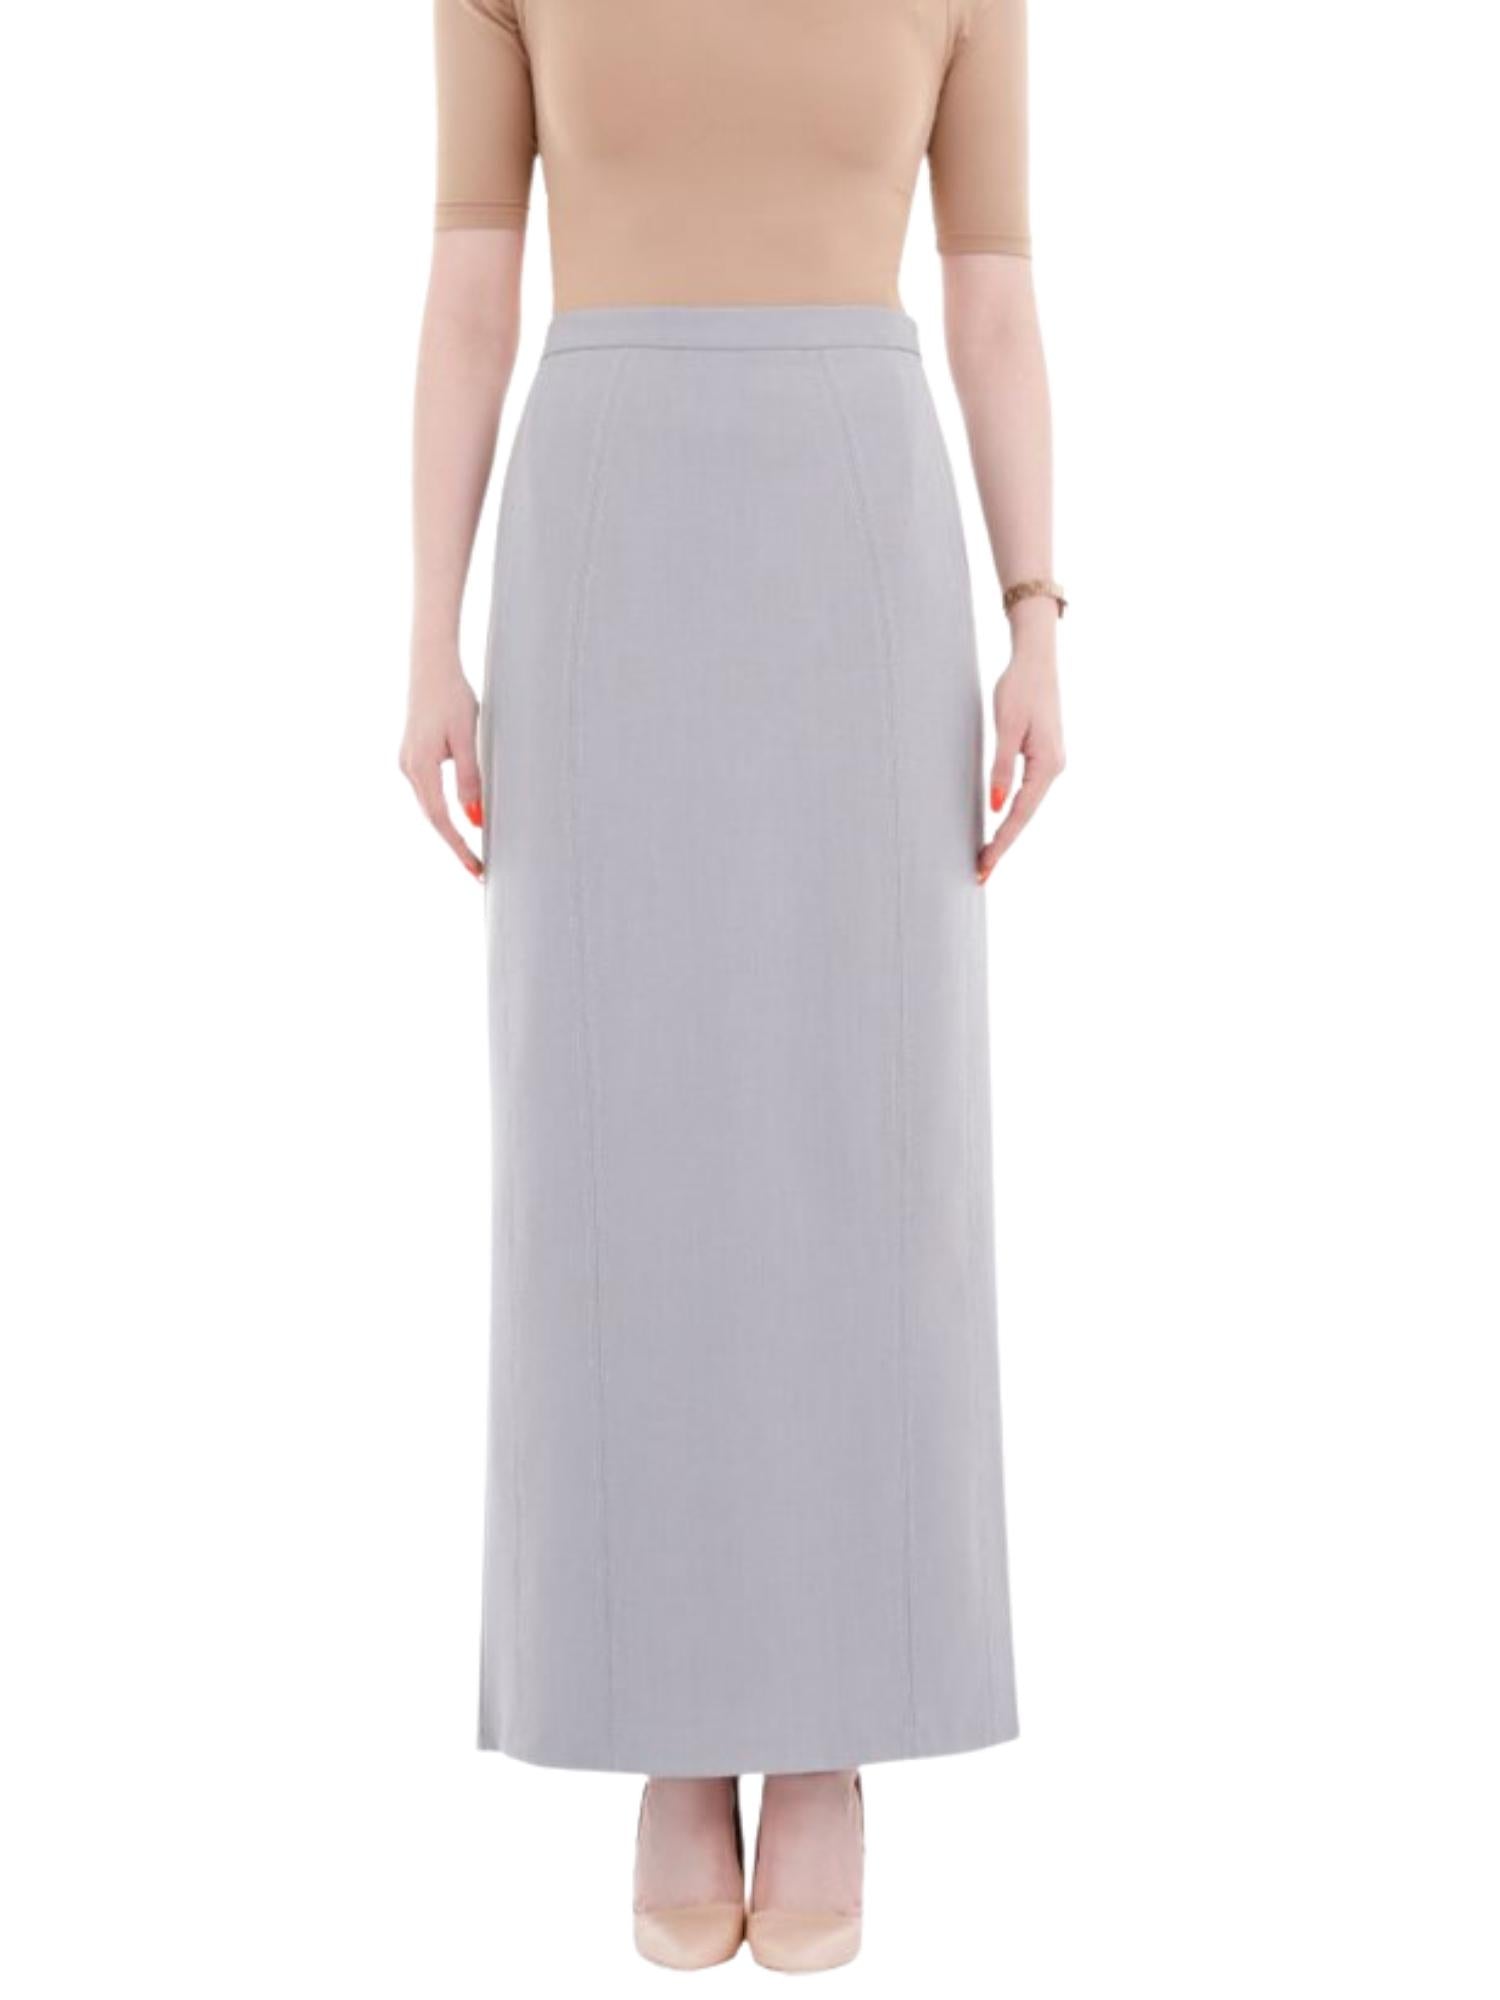 Silver Ankle Length Women's Plus Size Back Split Maxi Skirt G-Line